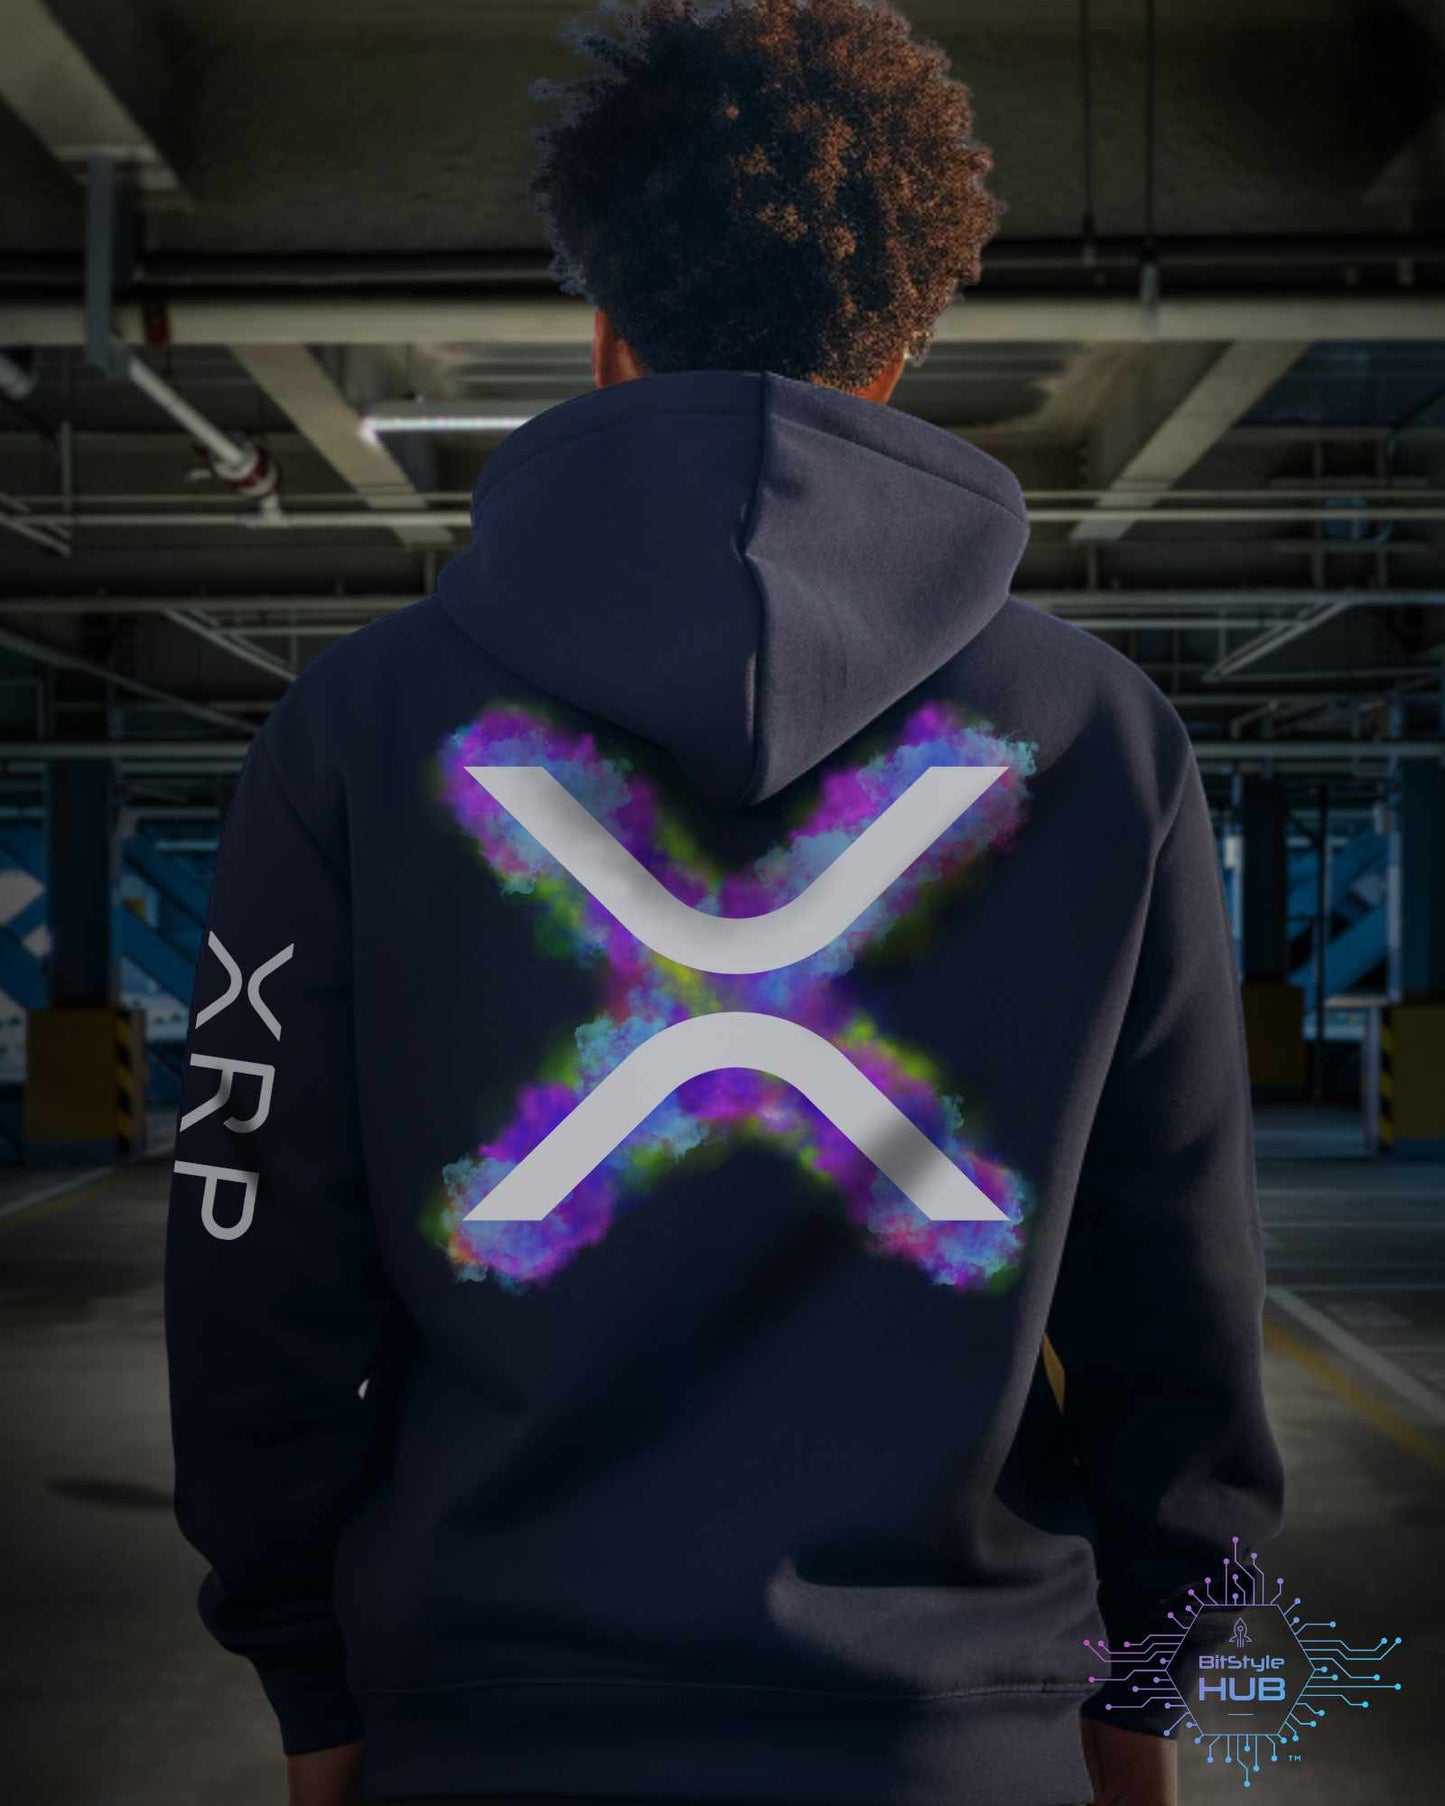 XRP 'WEN Moon X'  Hooded Sweatshirt -Unisex Crypto Apparel